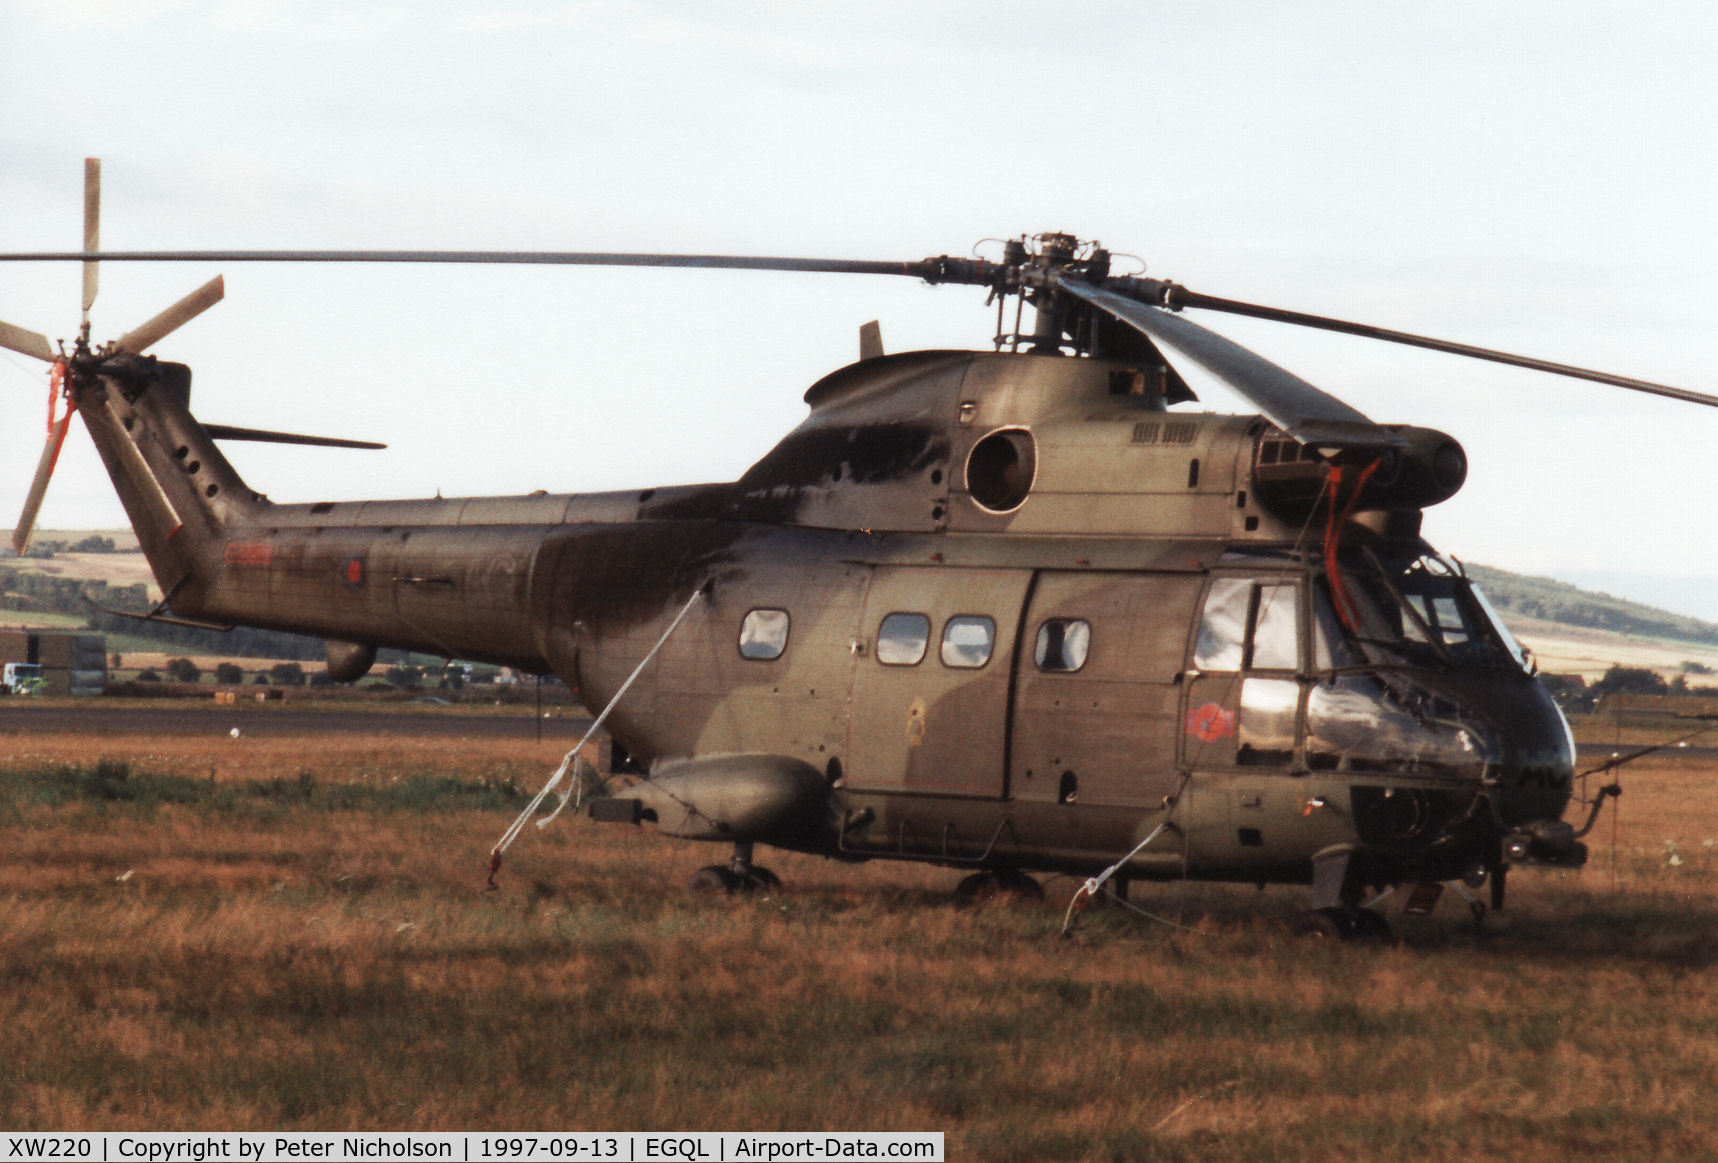 XW220, 1971 Westland Puma HC.1 C/N 1148, Puma HC.1, callsign Swallow 72, of 72 Squadron on display at the 1997 RAF Leuchars Airshow.